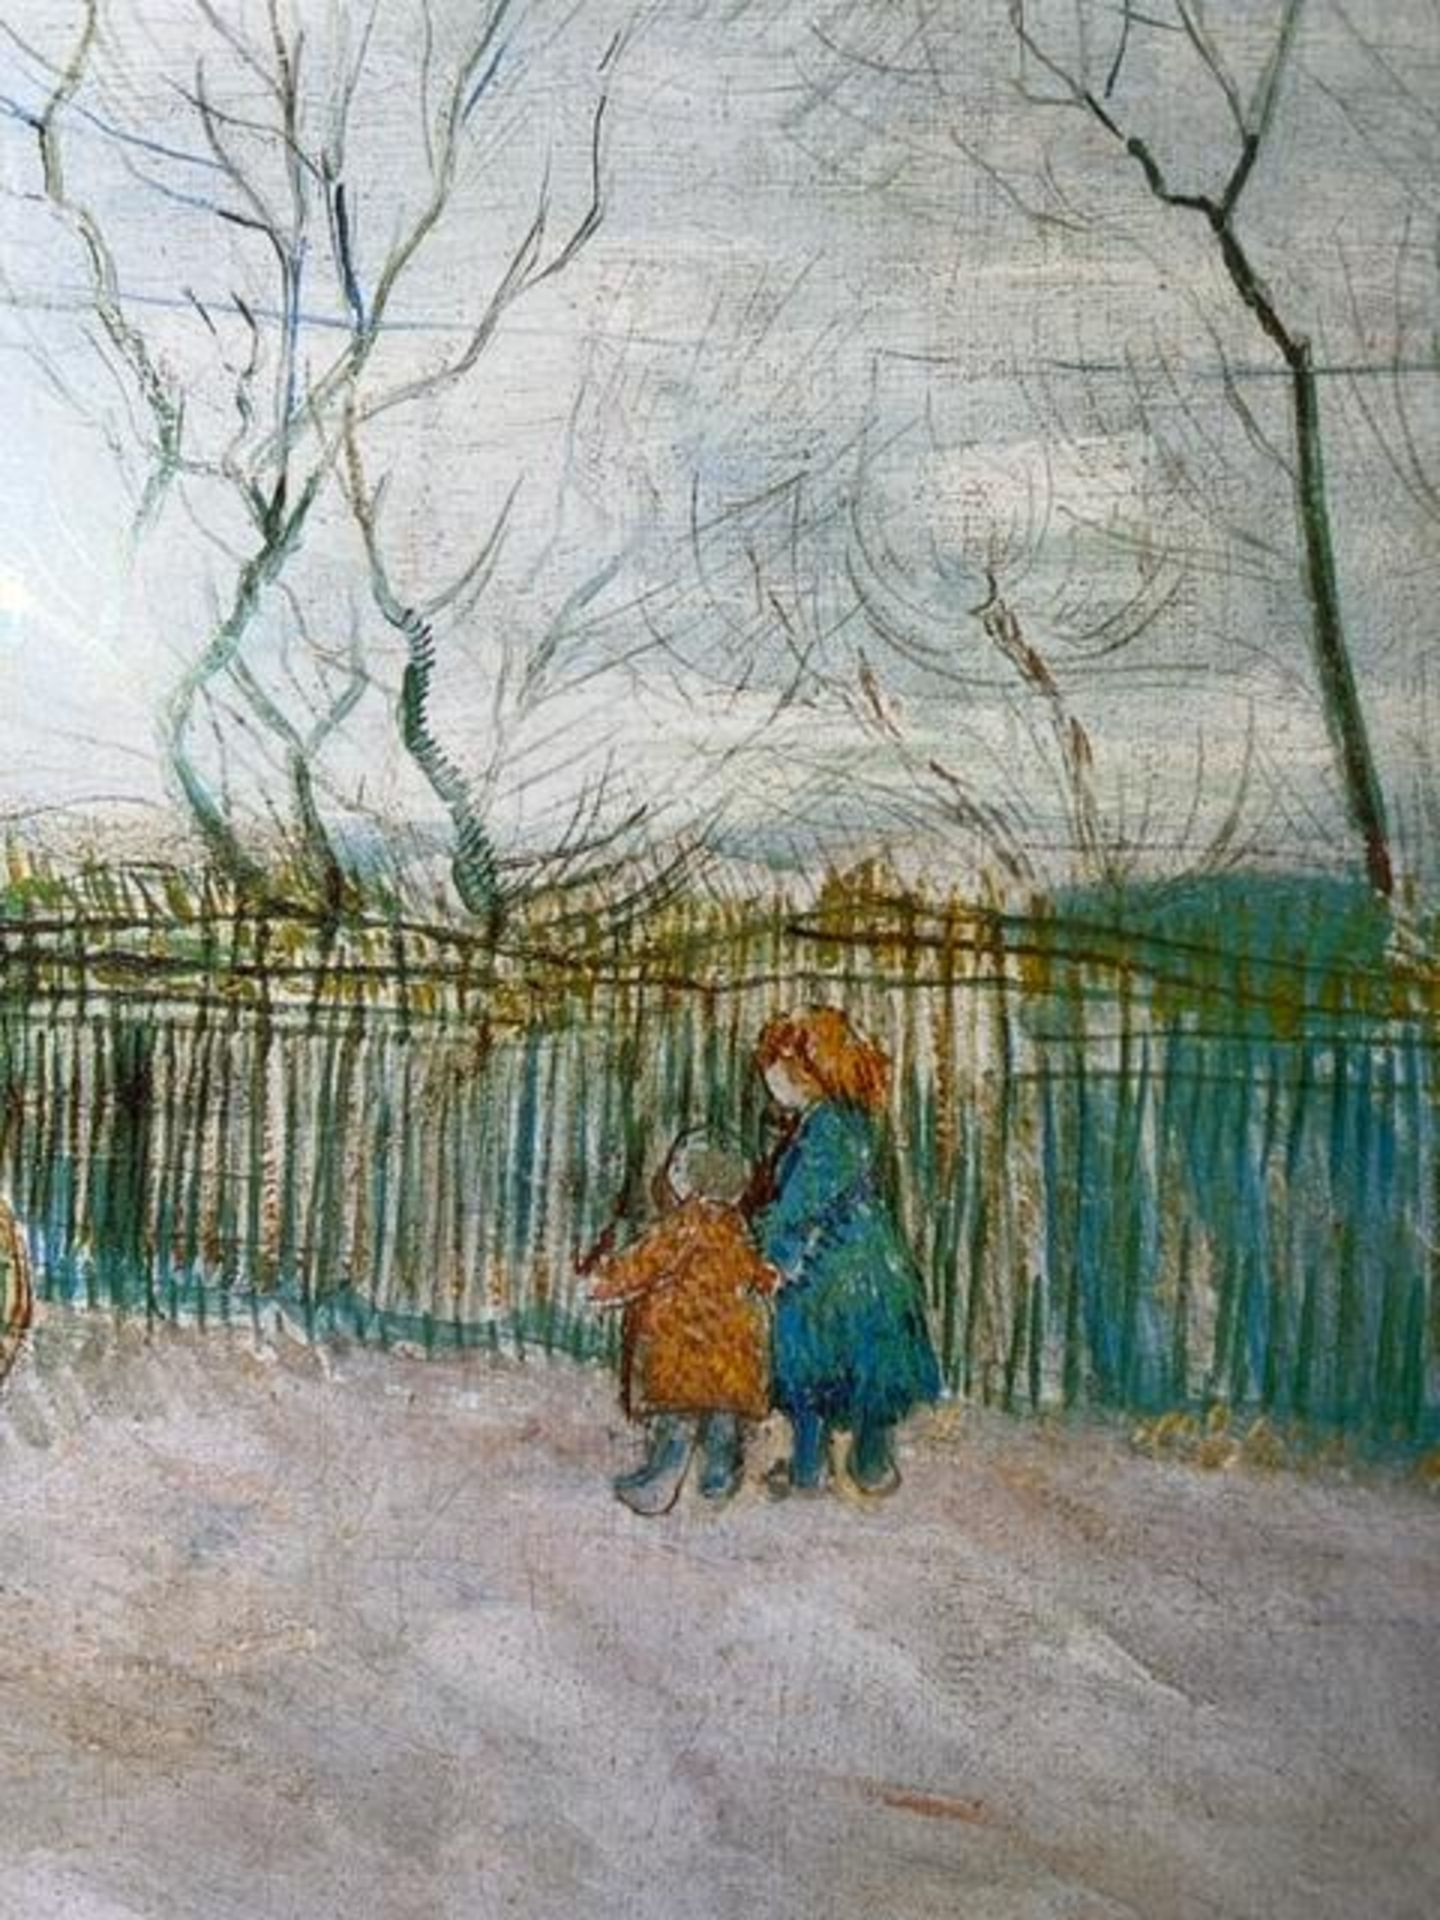 Vincent van Gogh "Street Scene" Print. - Image 5 of 6